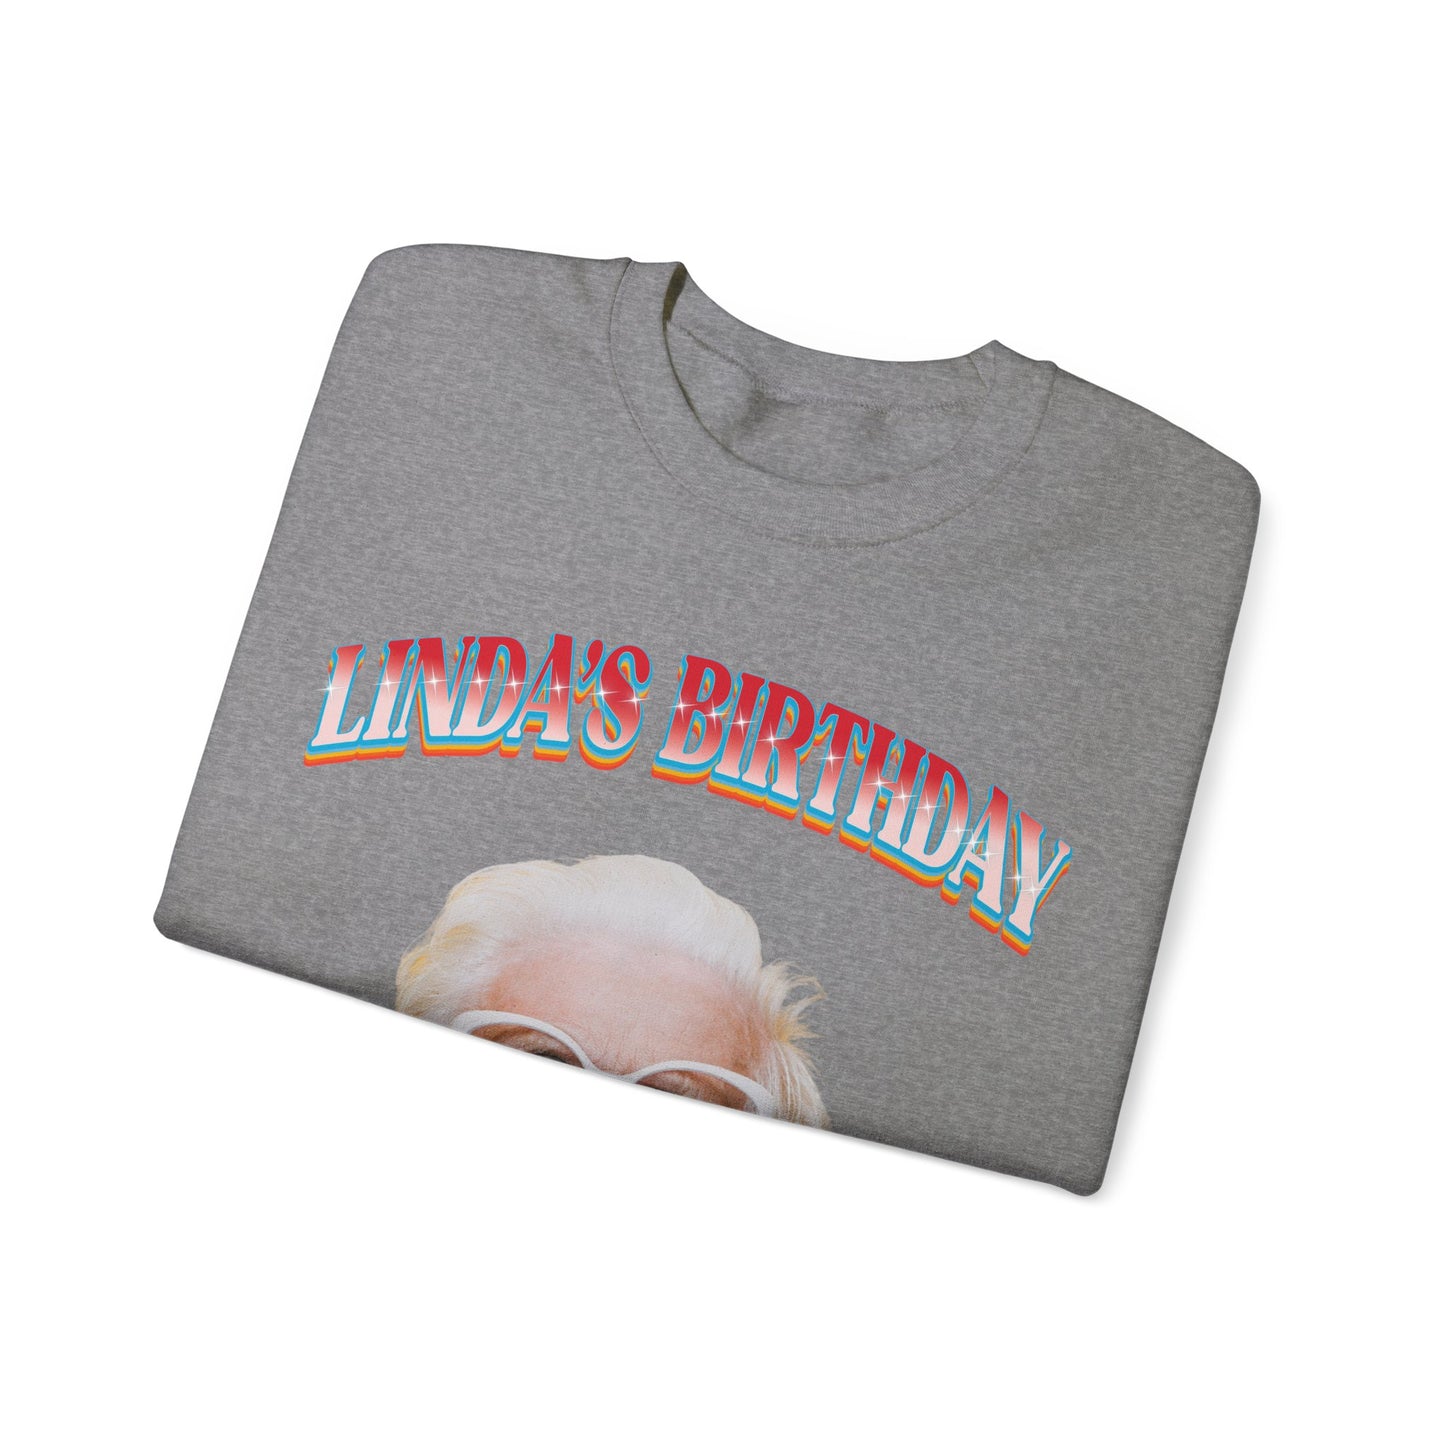 Custom Face Birthday Sweatshirts, Funny Birthday Matching Sweatshirts, Birthday Photo Sweatshirts, Birthday Party Group Sweatshirts, S1650